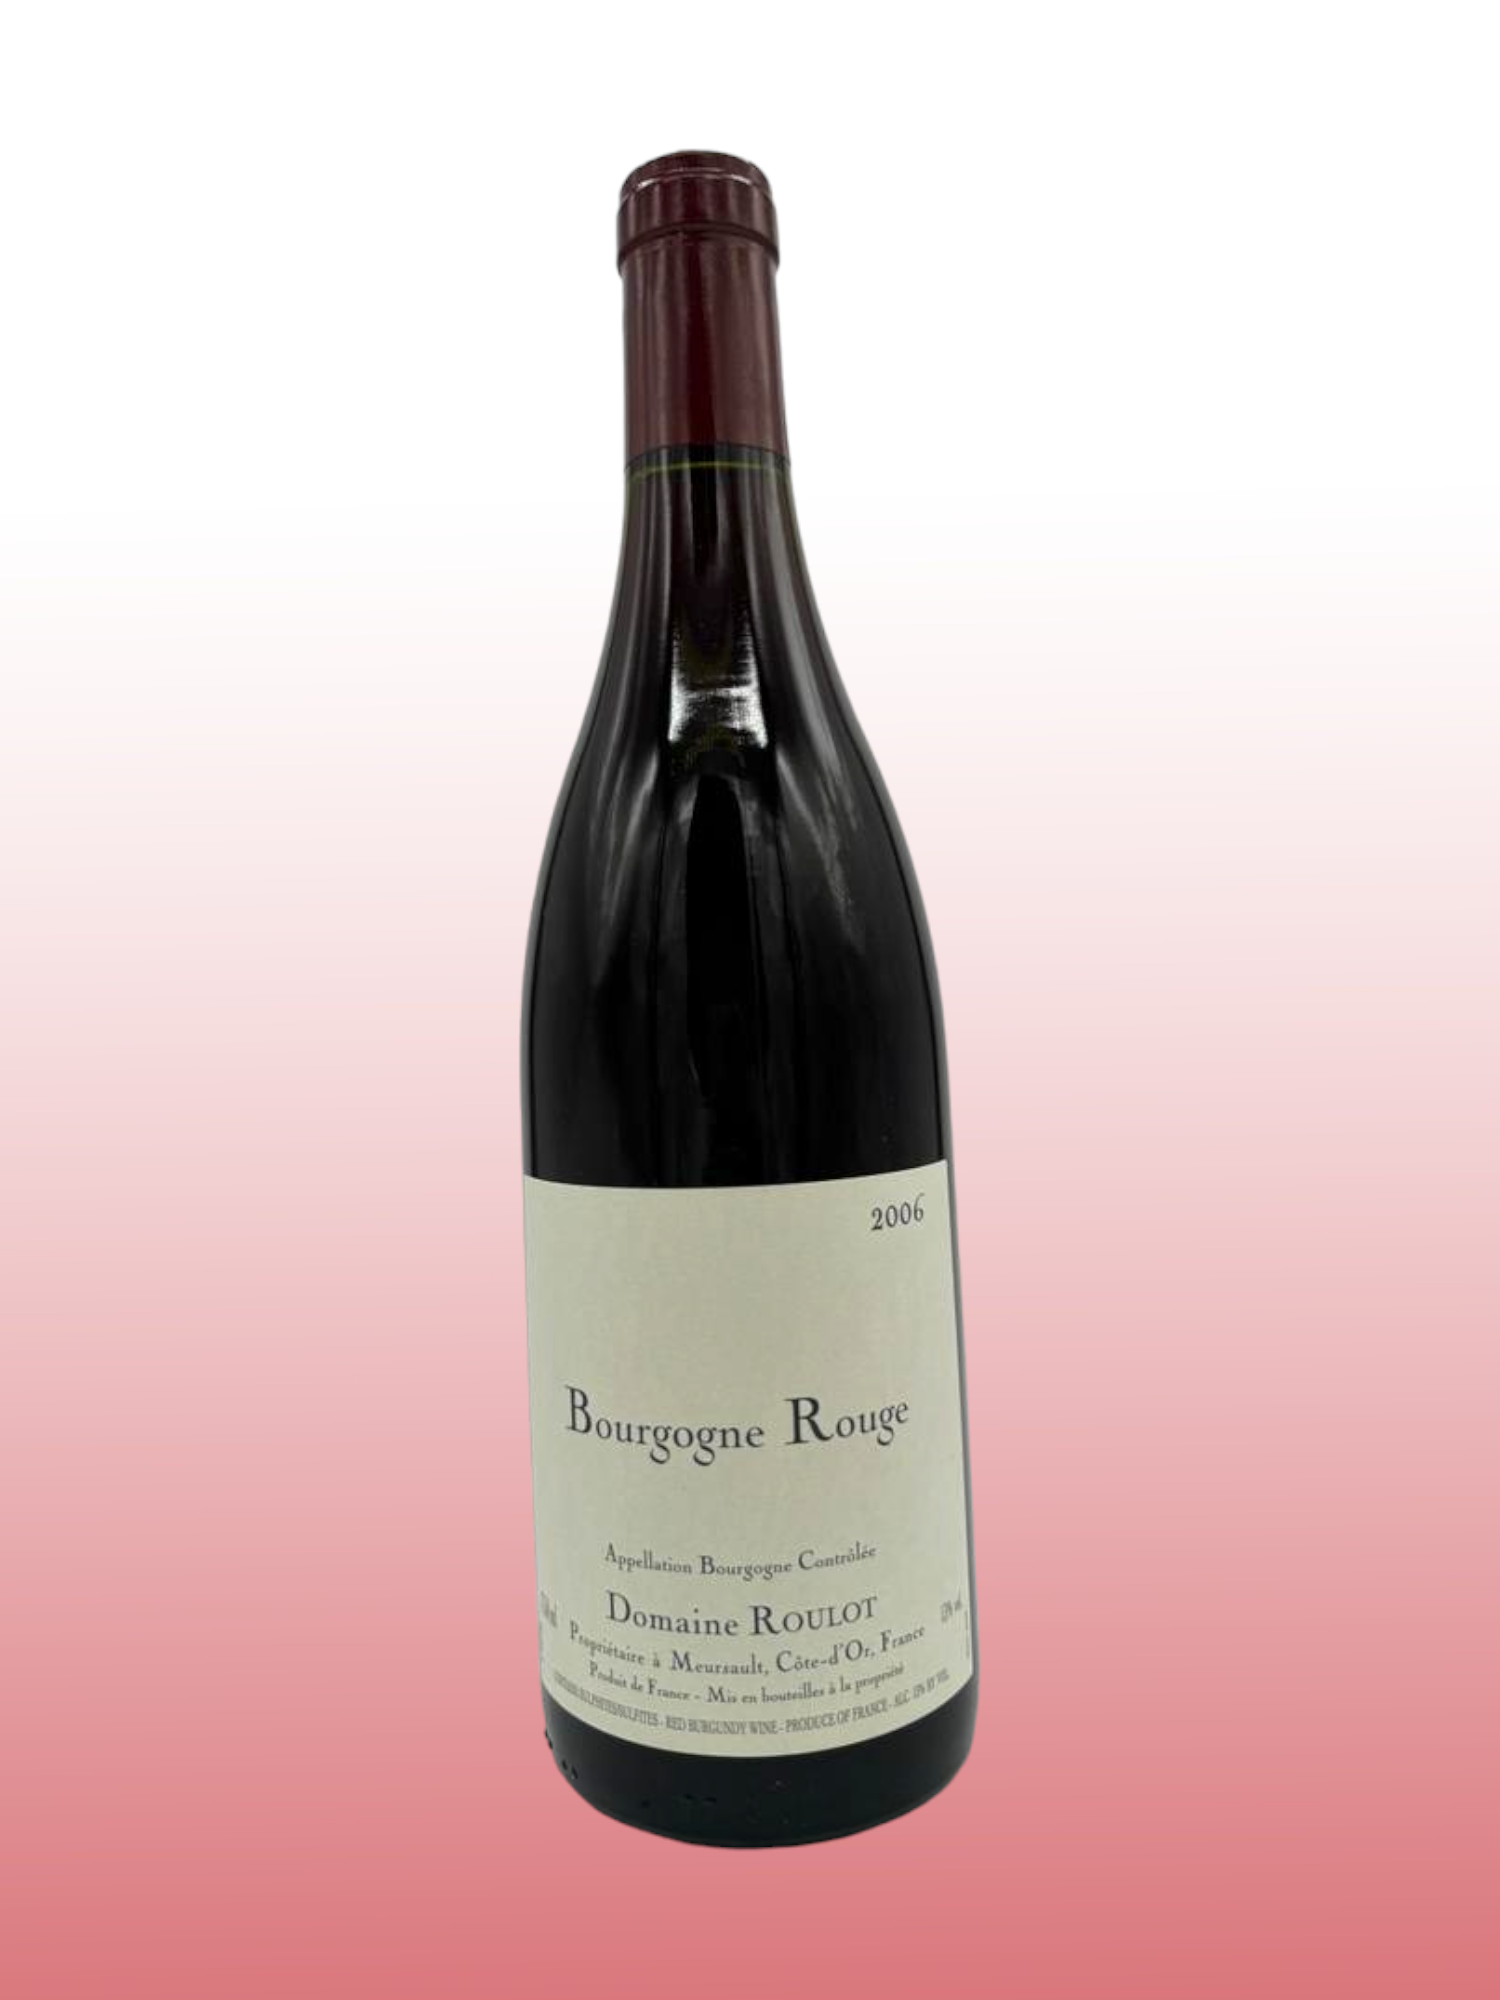 2006 Bourgogne Rouge